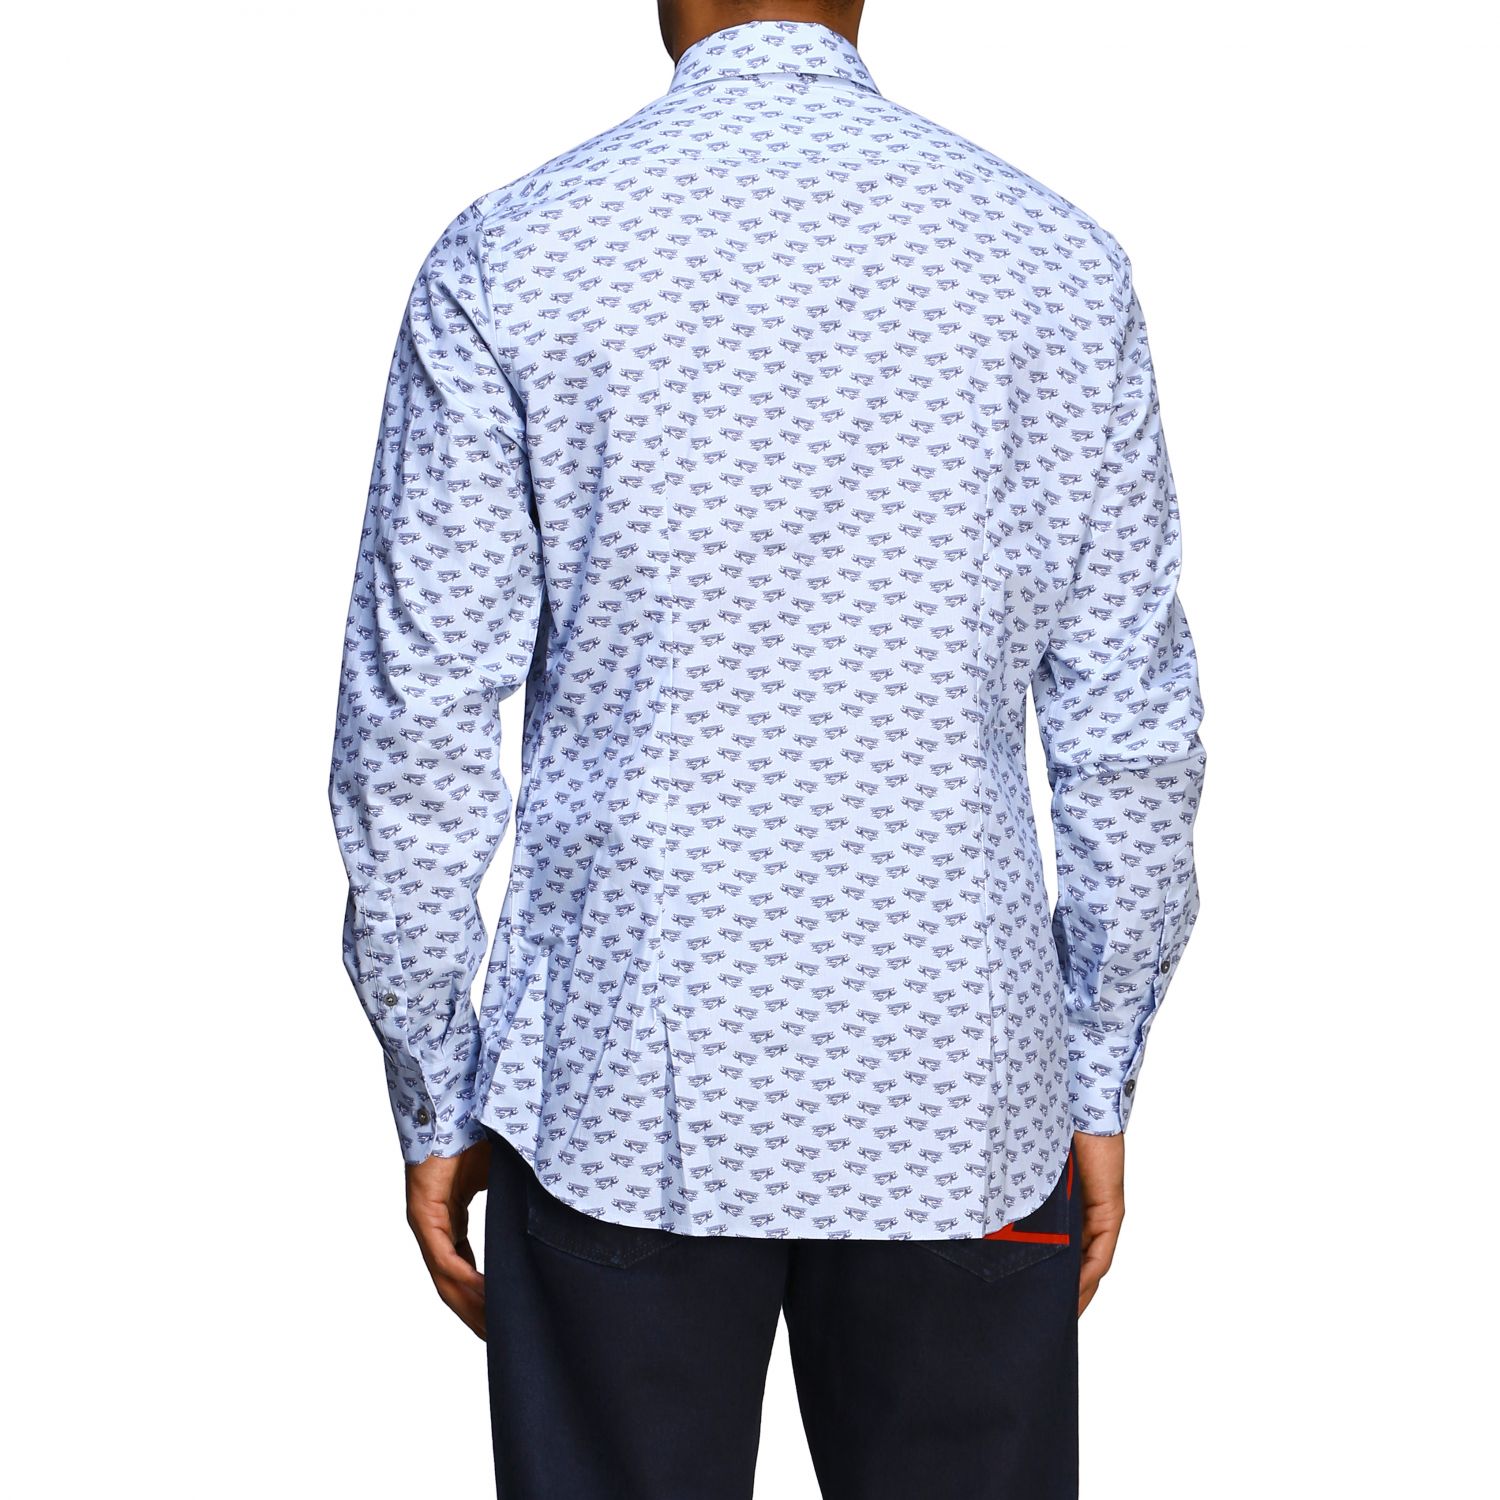 PRADA: shirt with Italian collar and voyage print - Gnawed Blue | Prada ...